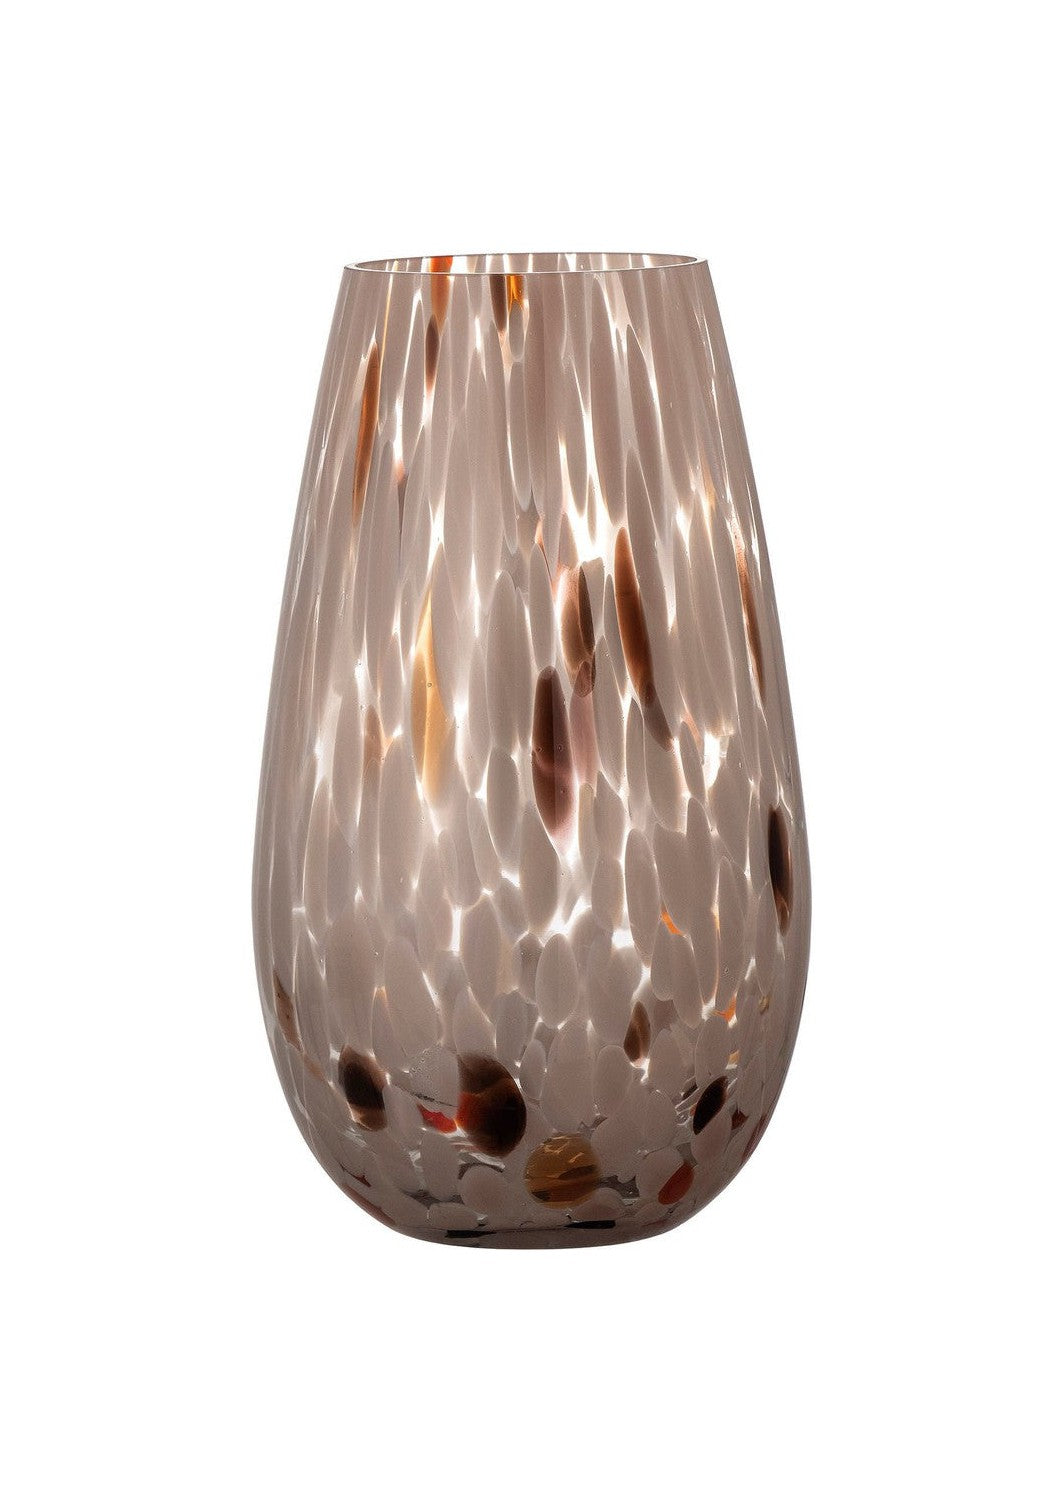 Bloomingville Artem Vase, Brown, Glass